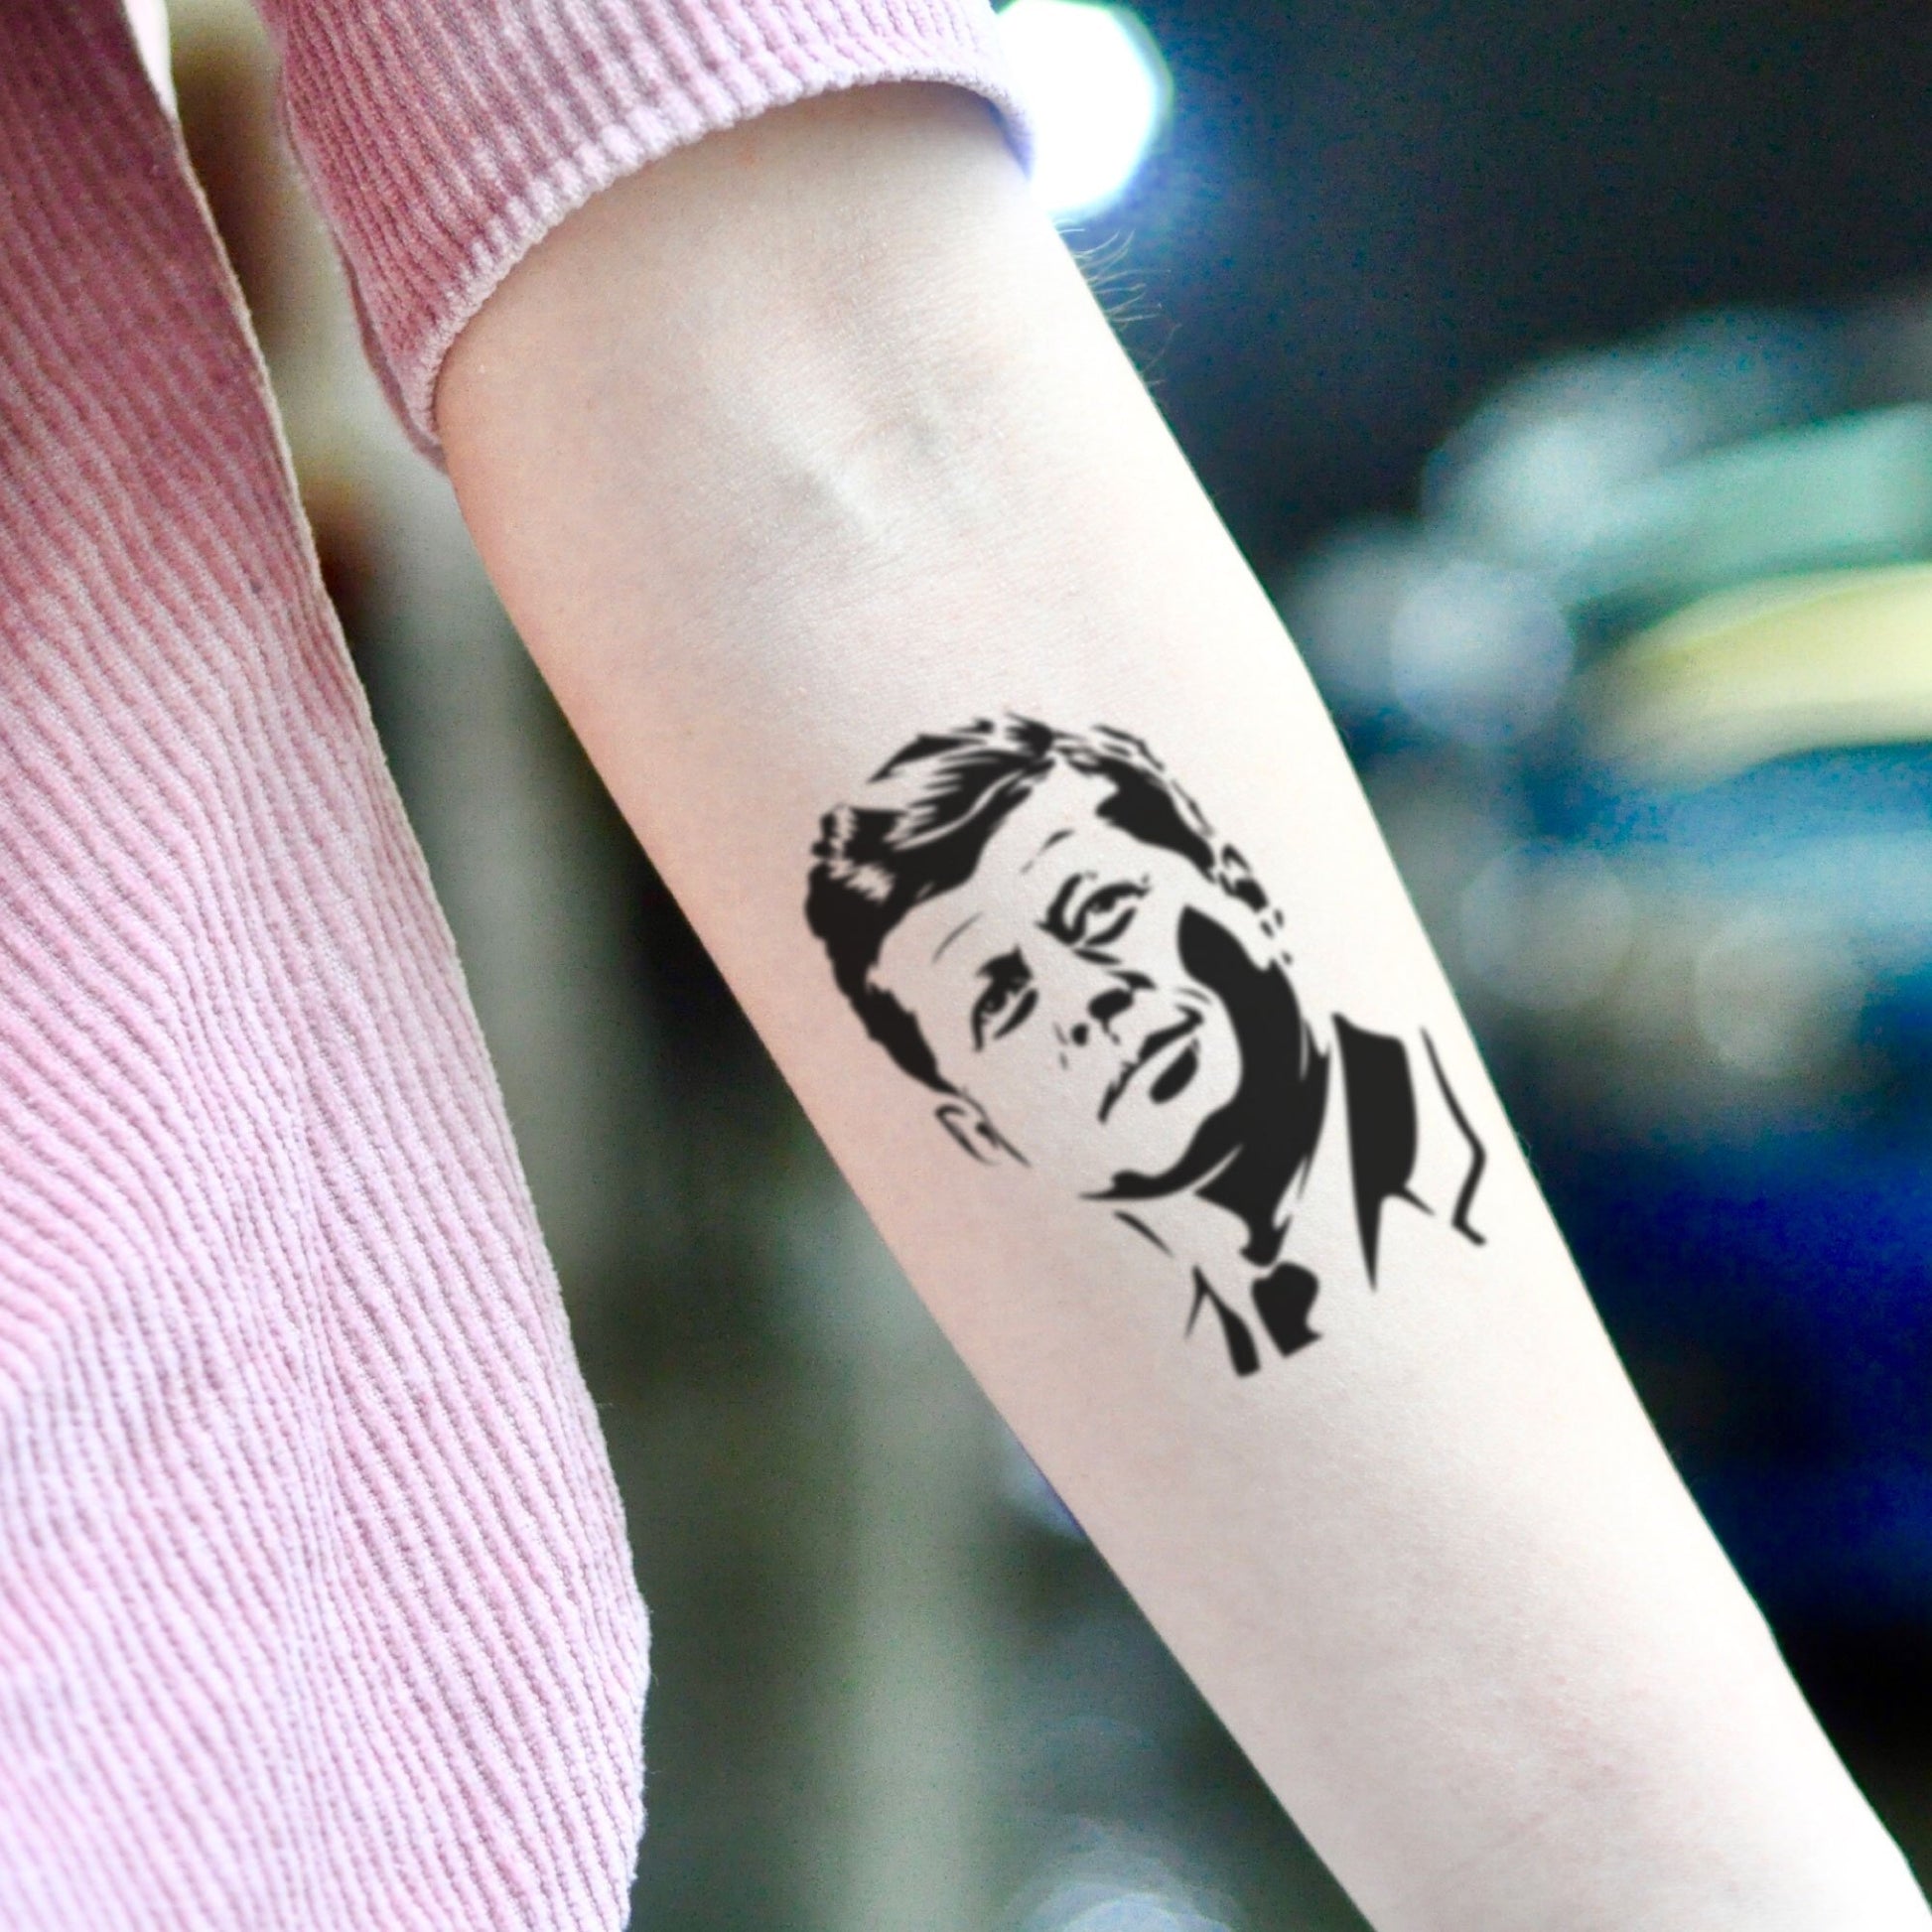 fake small jfk john f kennedy portrait temporary tattoo sticker design idea on inner arm